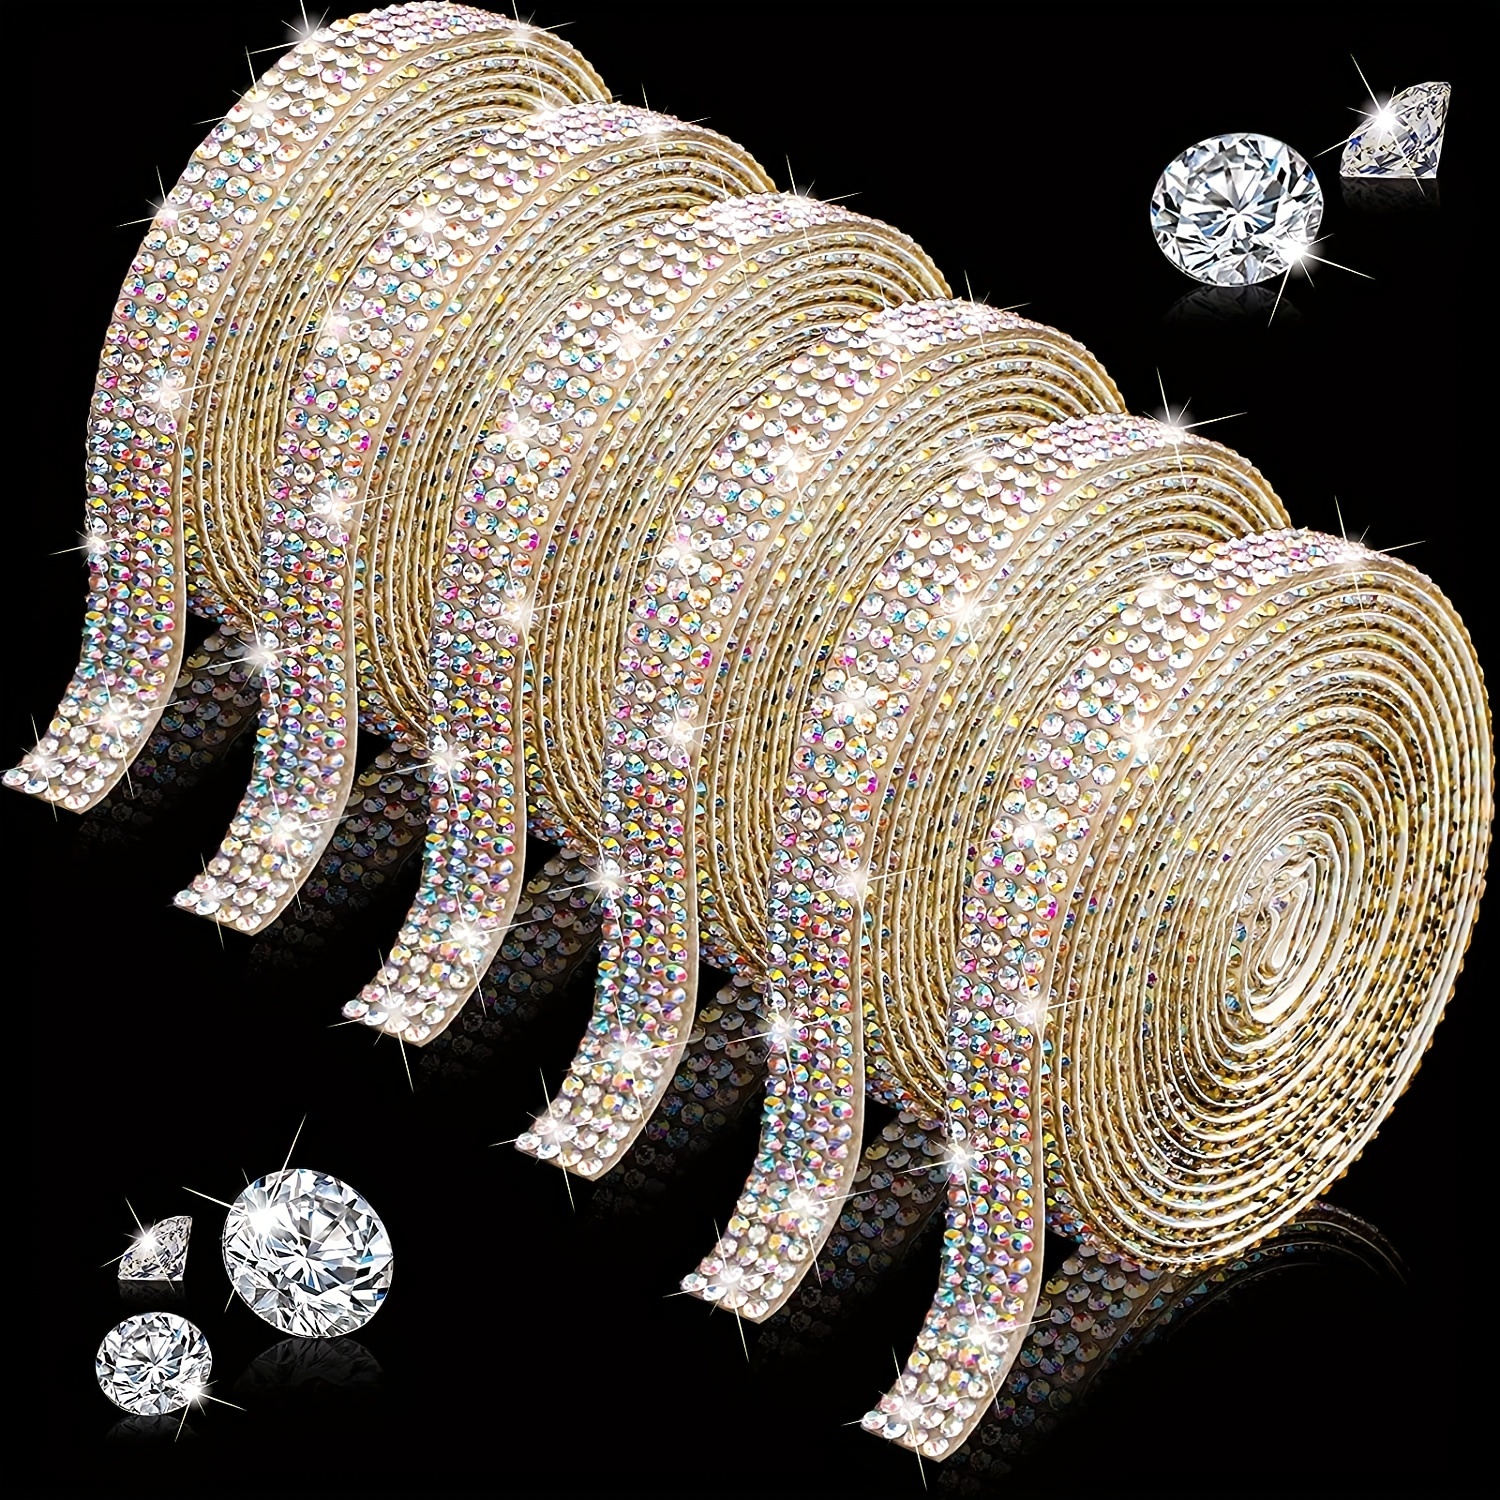 6 Rolls Self Adhesive Crystal Rhinestone Ribbon Diamond Bling Ribbons Wrap  6 Yards Mesh Glittering Sticker Roll for Arts Crafts Wedding Birthday DIY